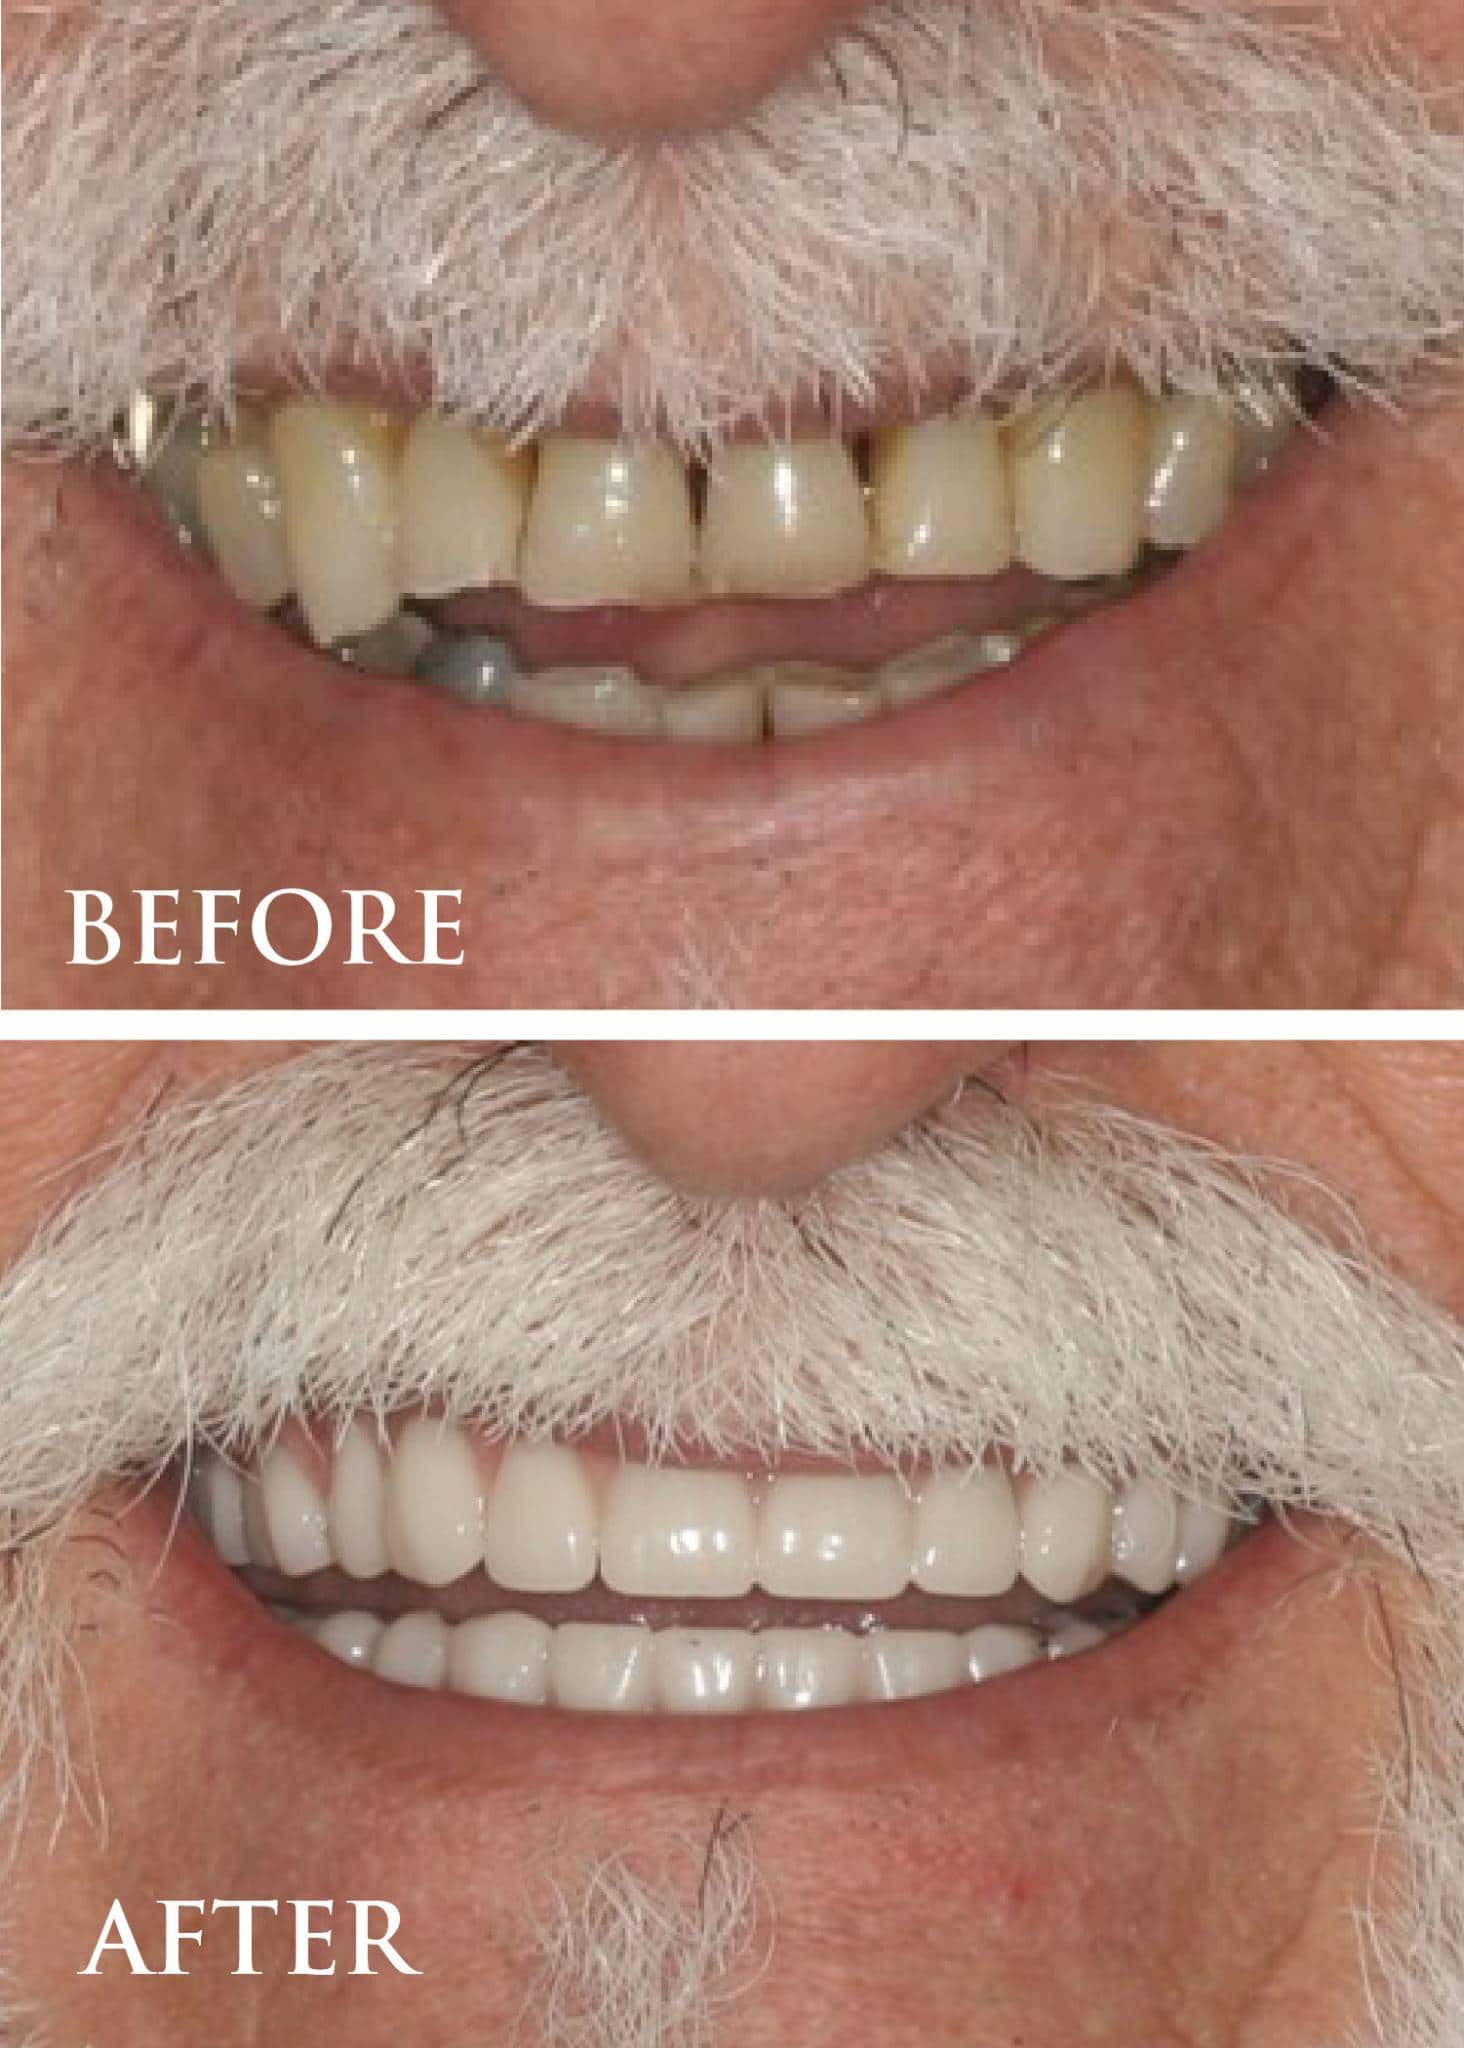 Full mouth restoration